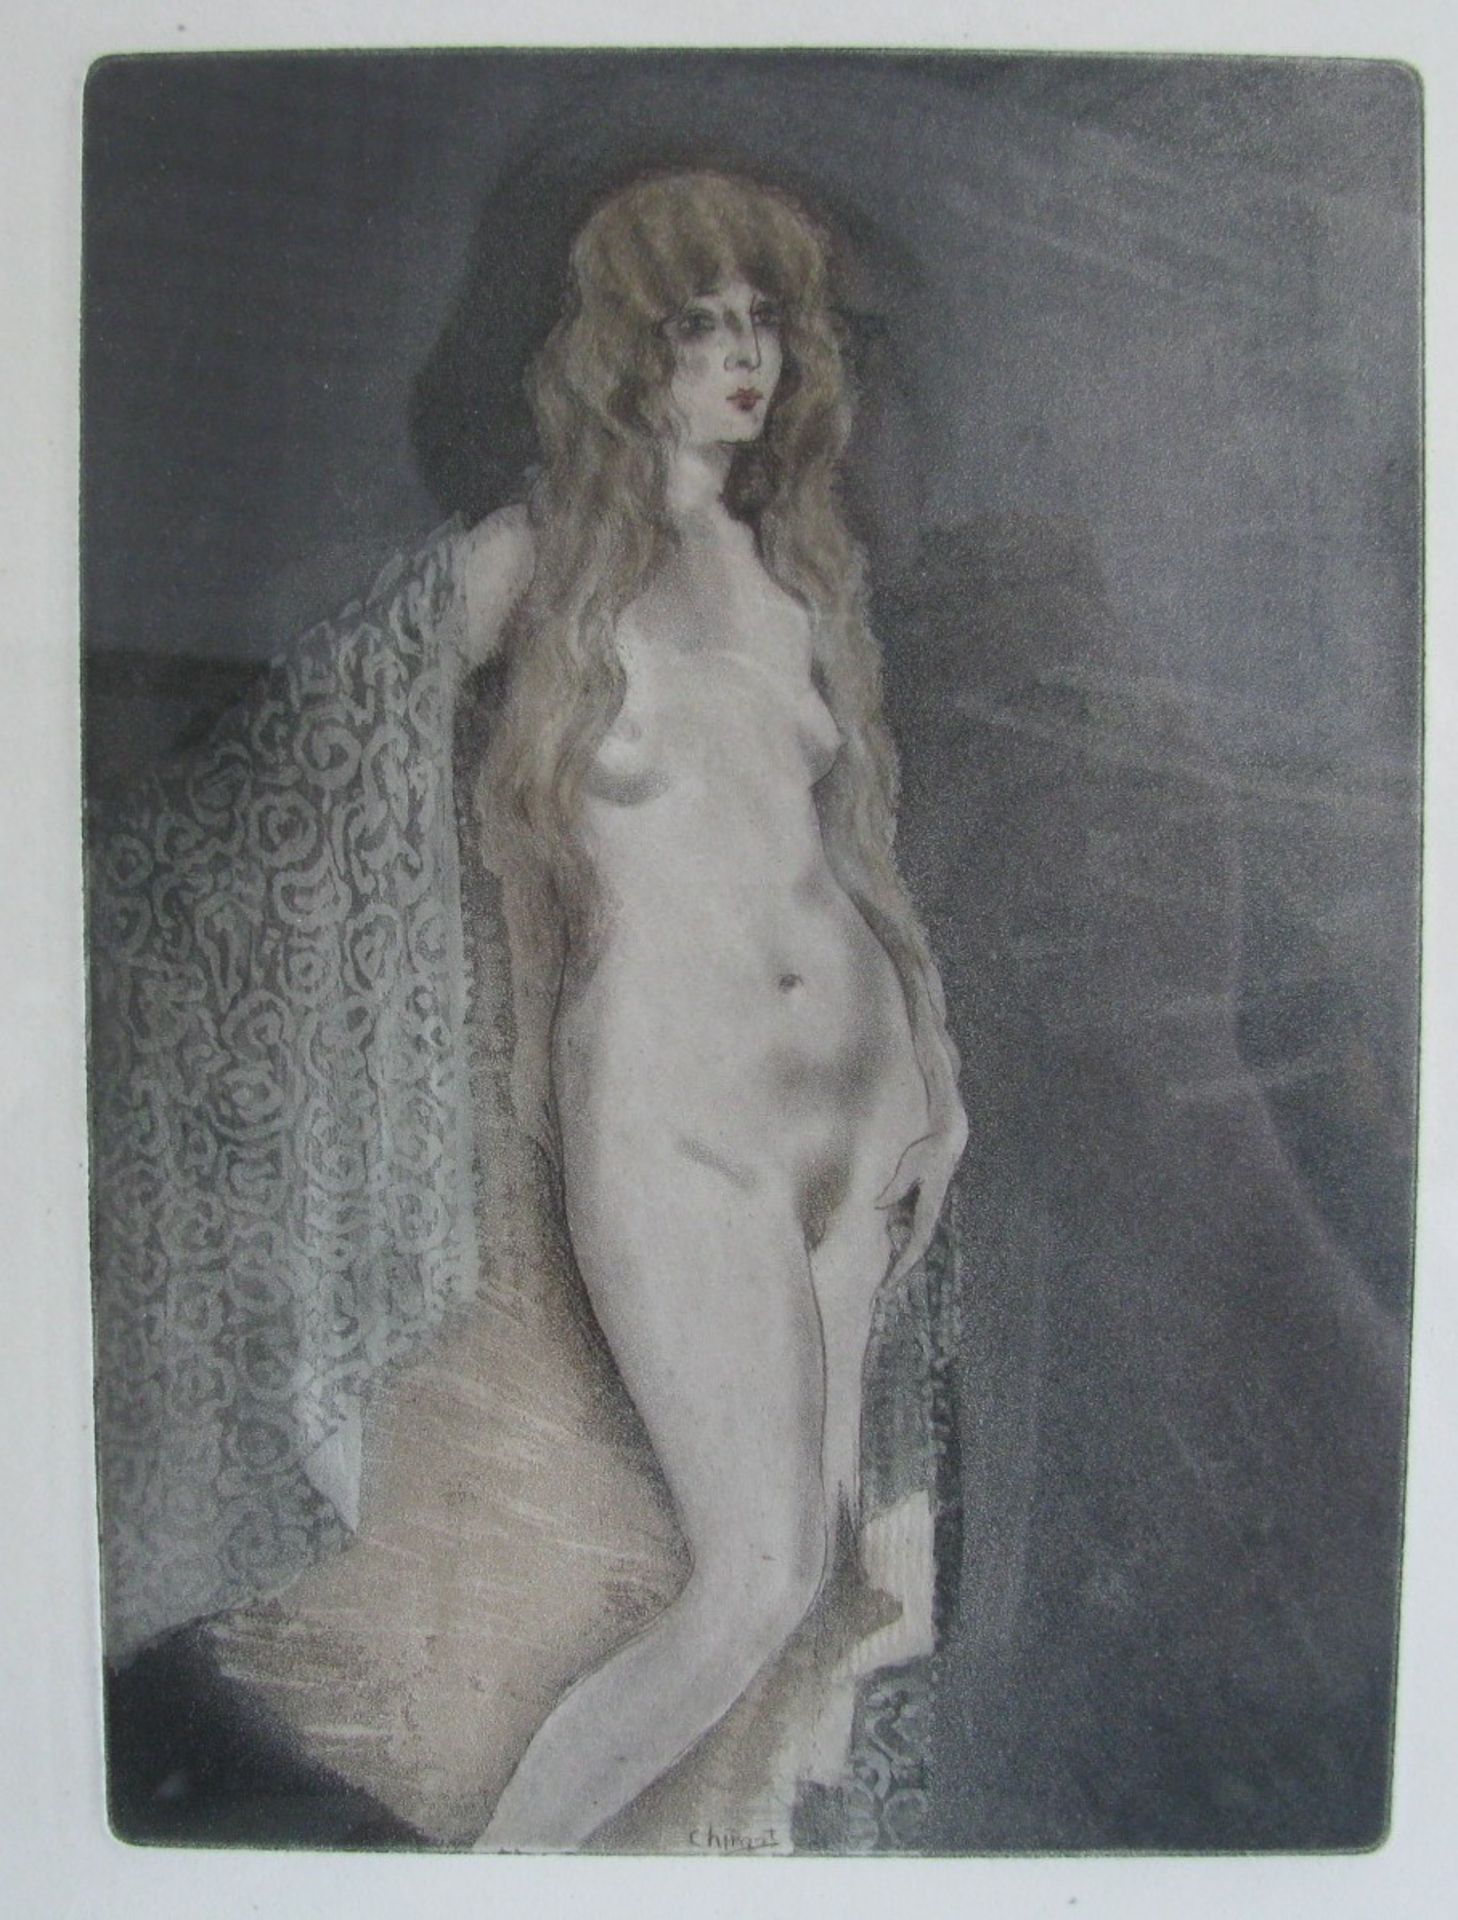 Chimot, Edouard Jules, 1880 - 1959, "Weiblicher Akt", Farblithografie, i.d.Pl.sign., 21,5 x 16 cm,